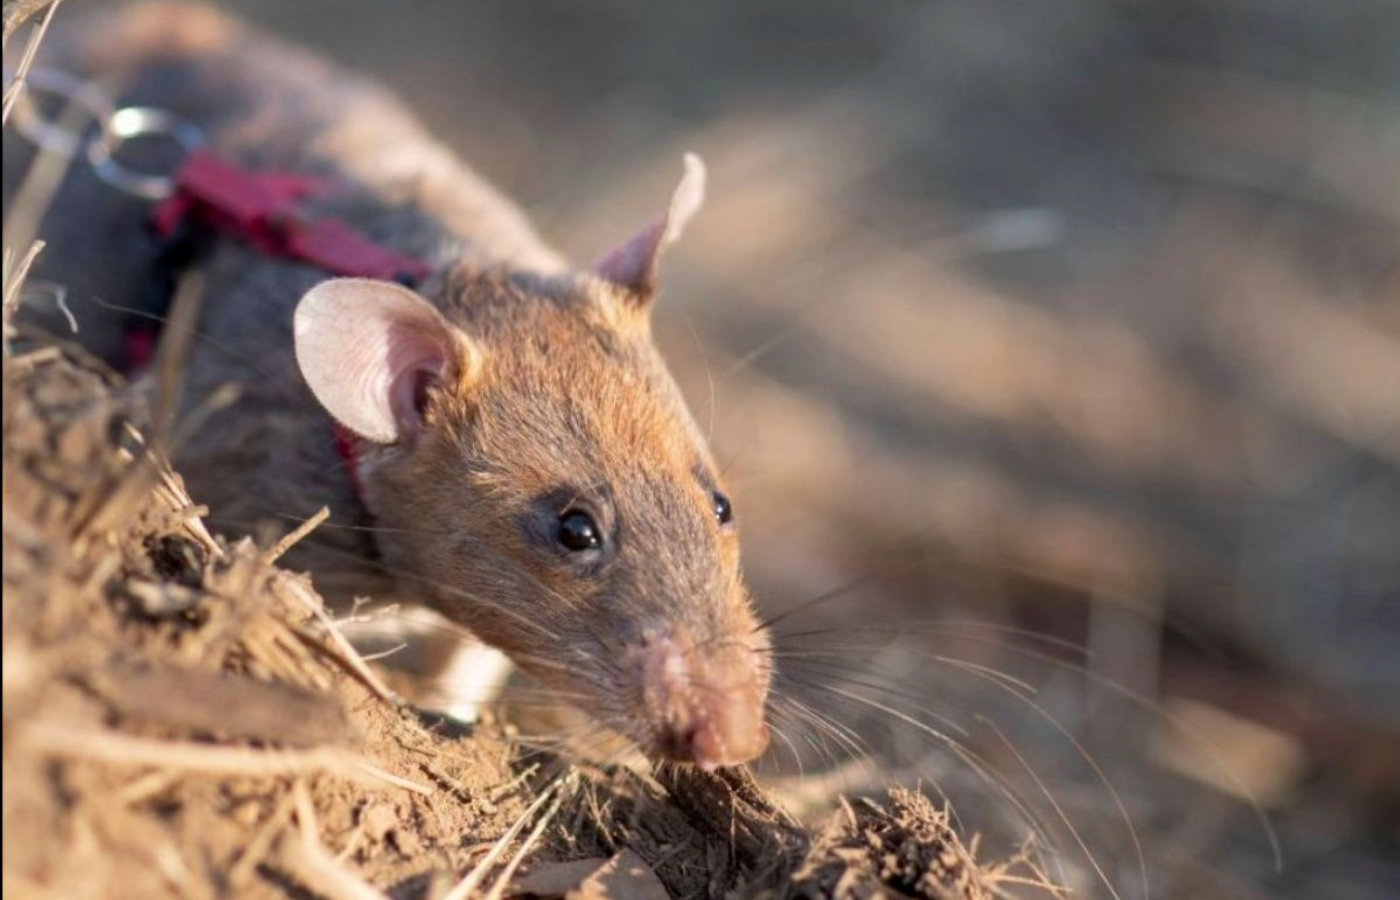 Ronin the Rat has identified 36 landmines in Cambodia.